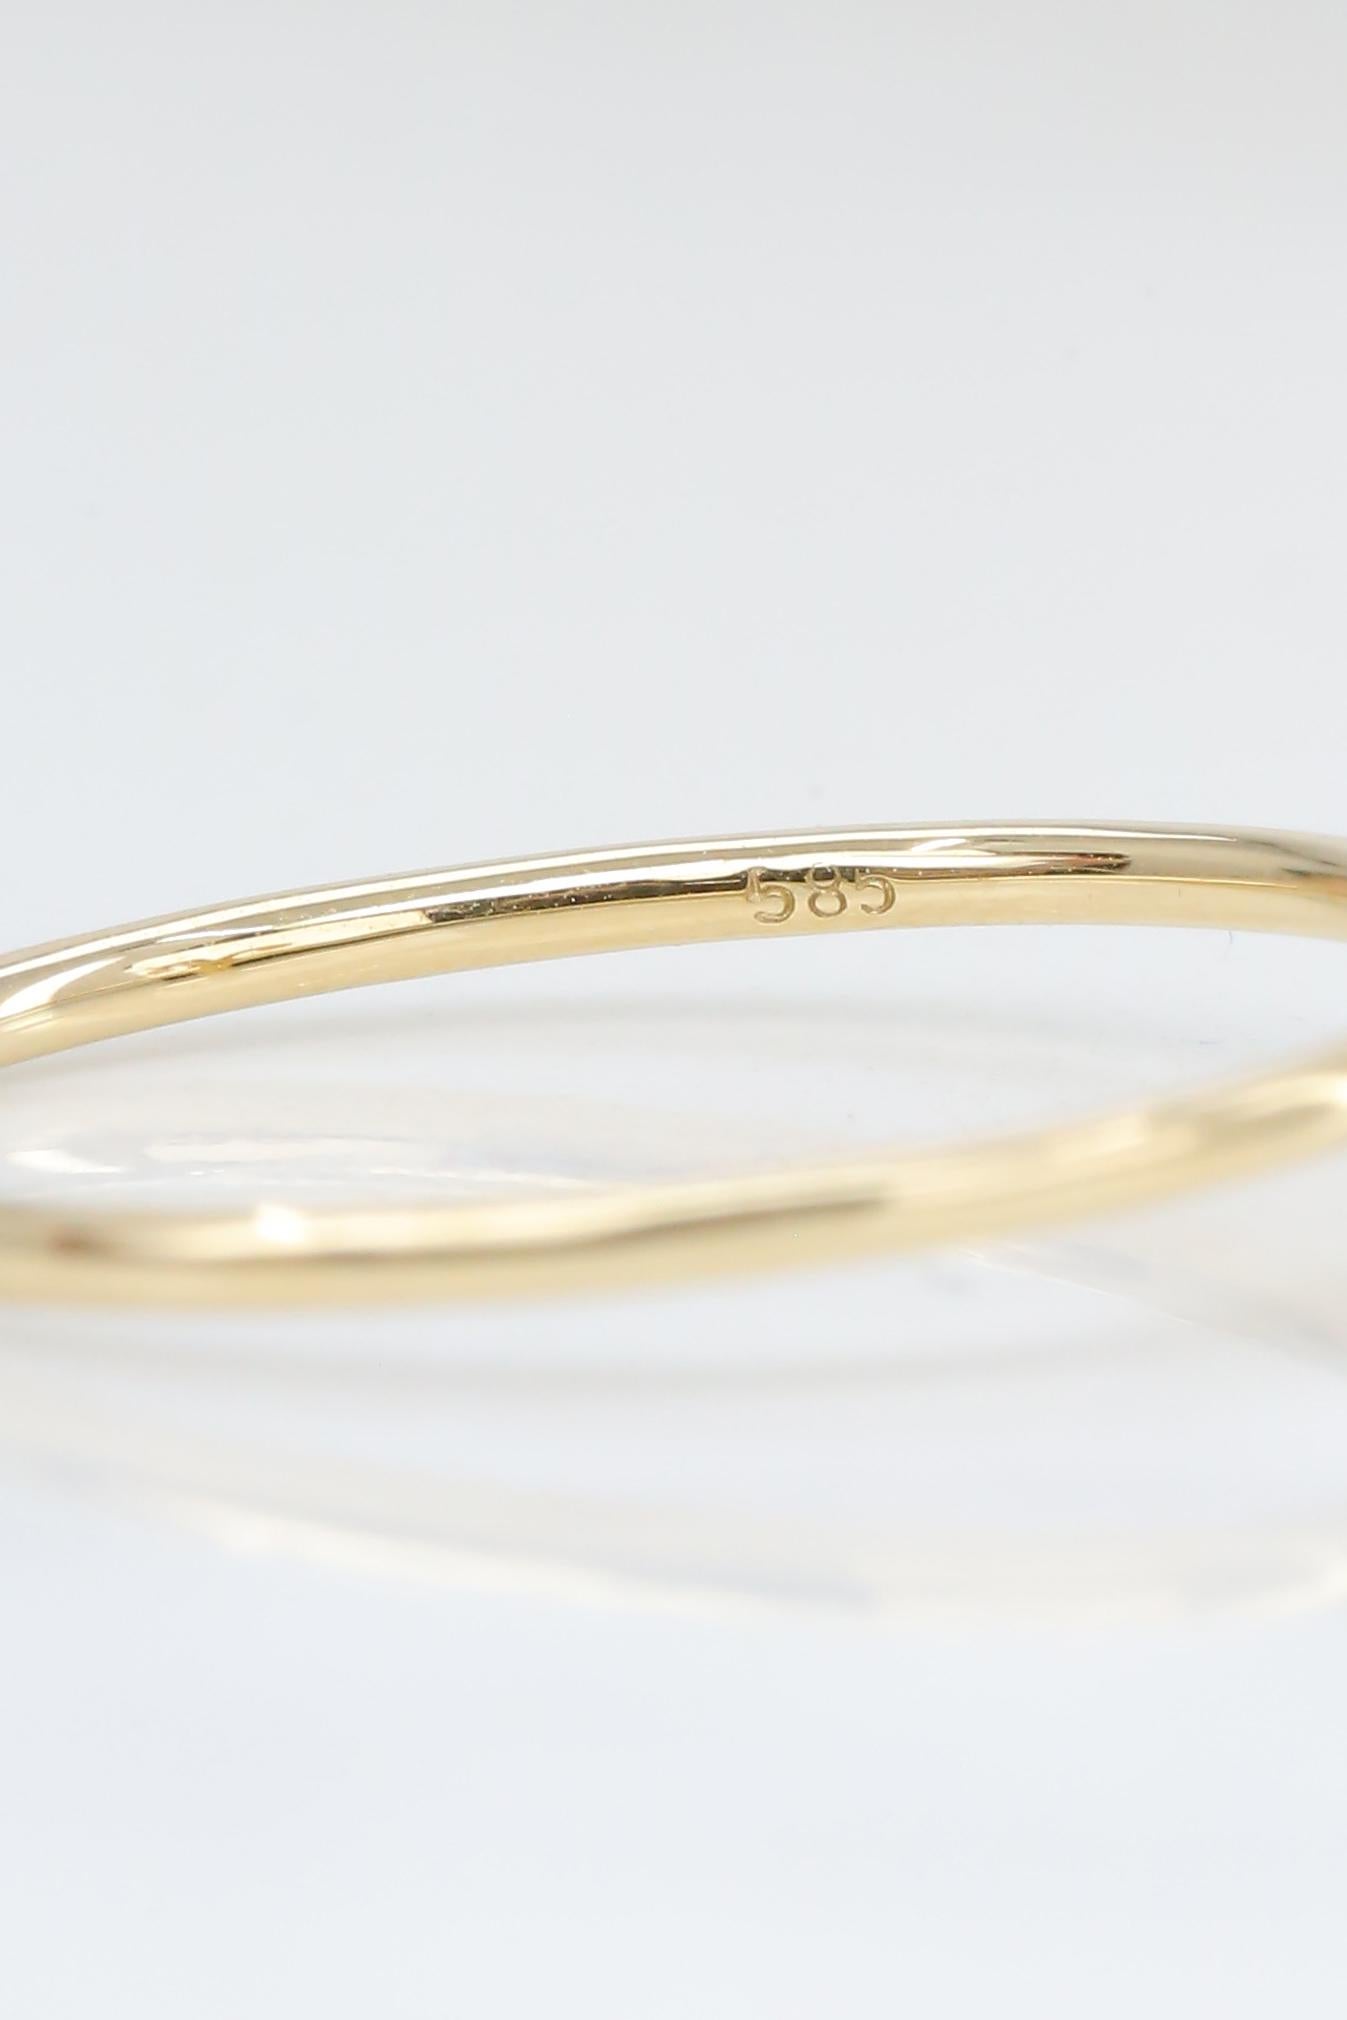 For Sale:  14k Gold Libra Ring, Libra Sign Gold Ring 8